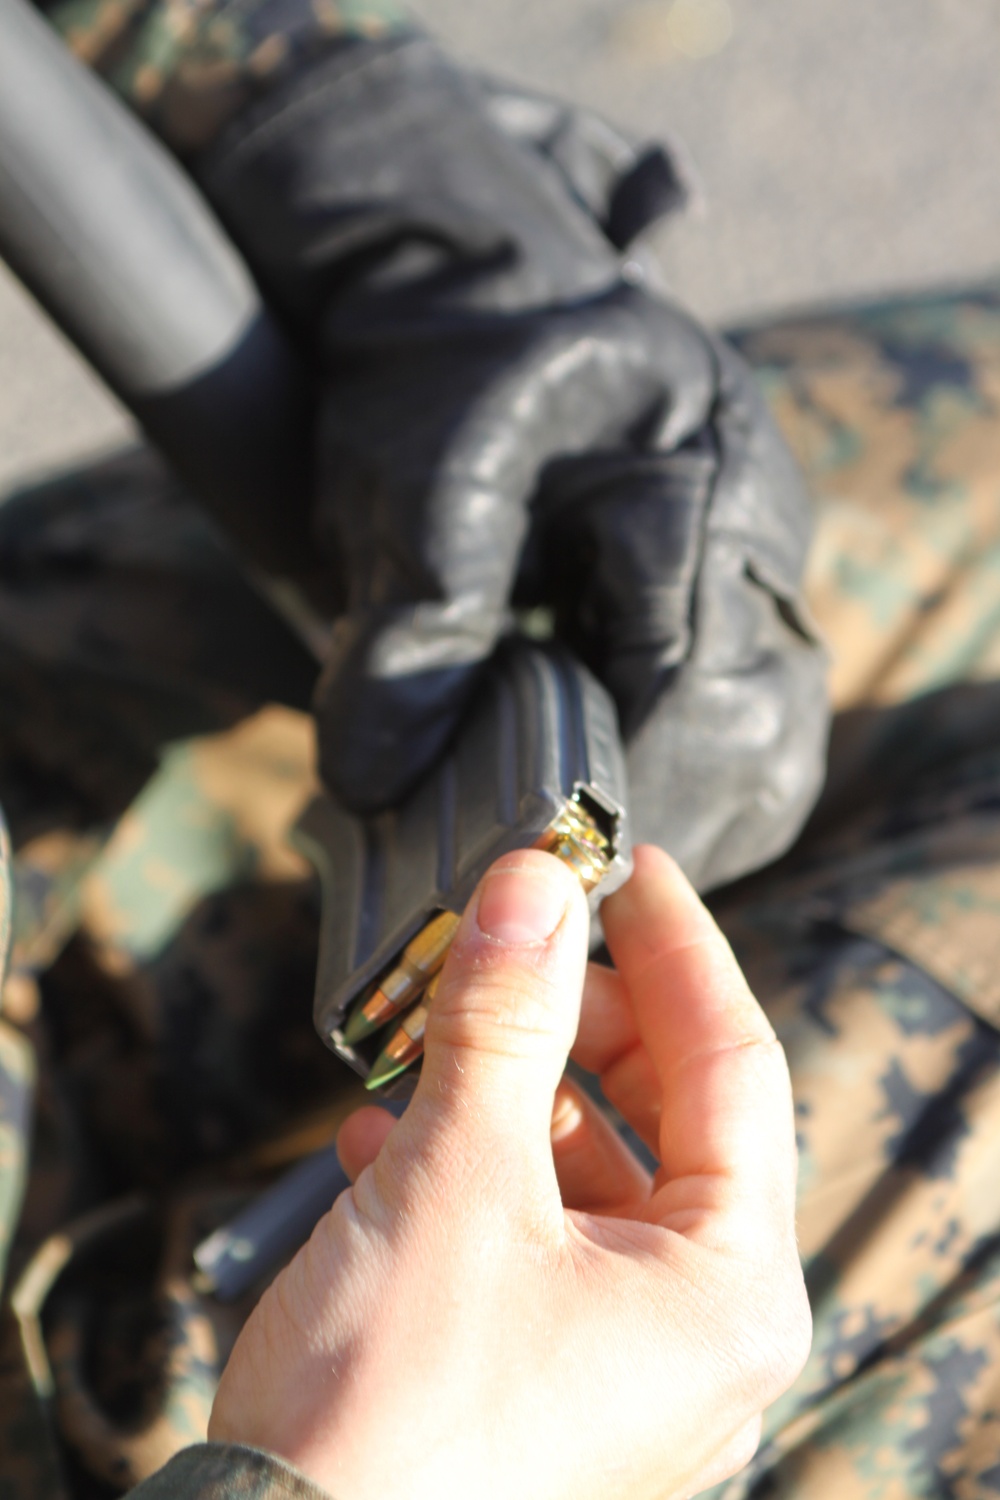 Company L recruits apply Marine Corps marksmanship skills